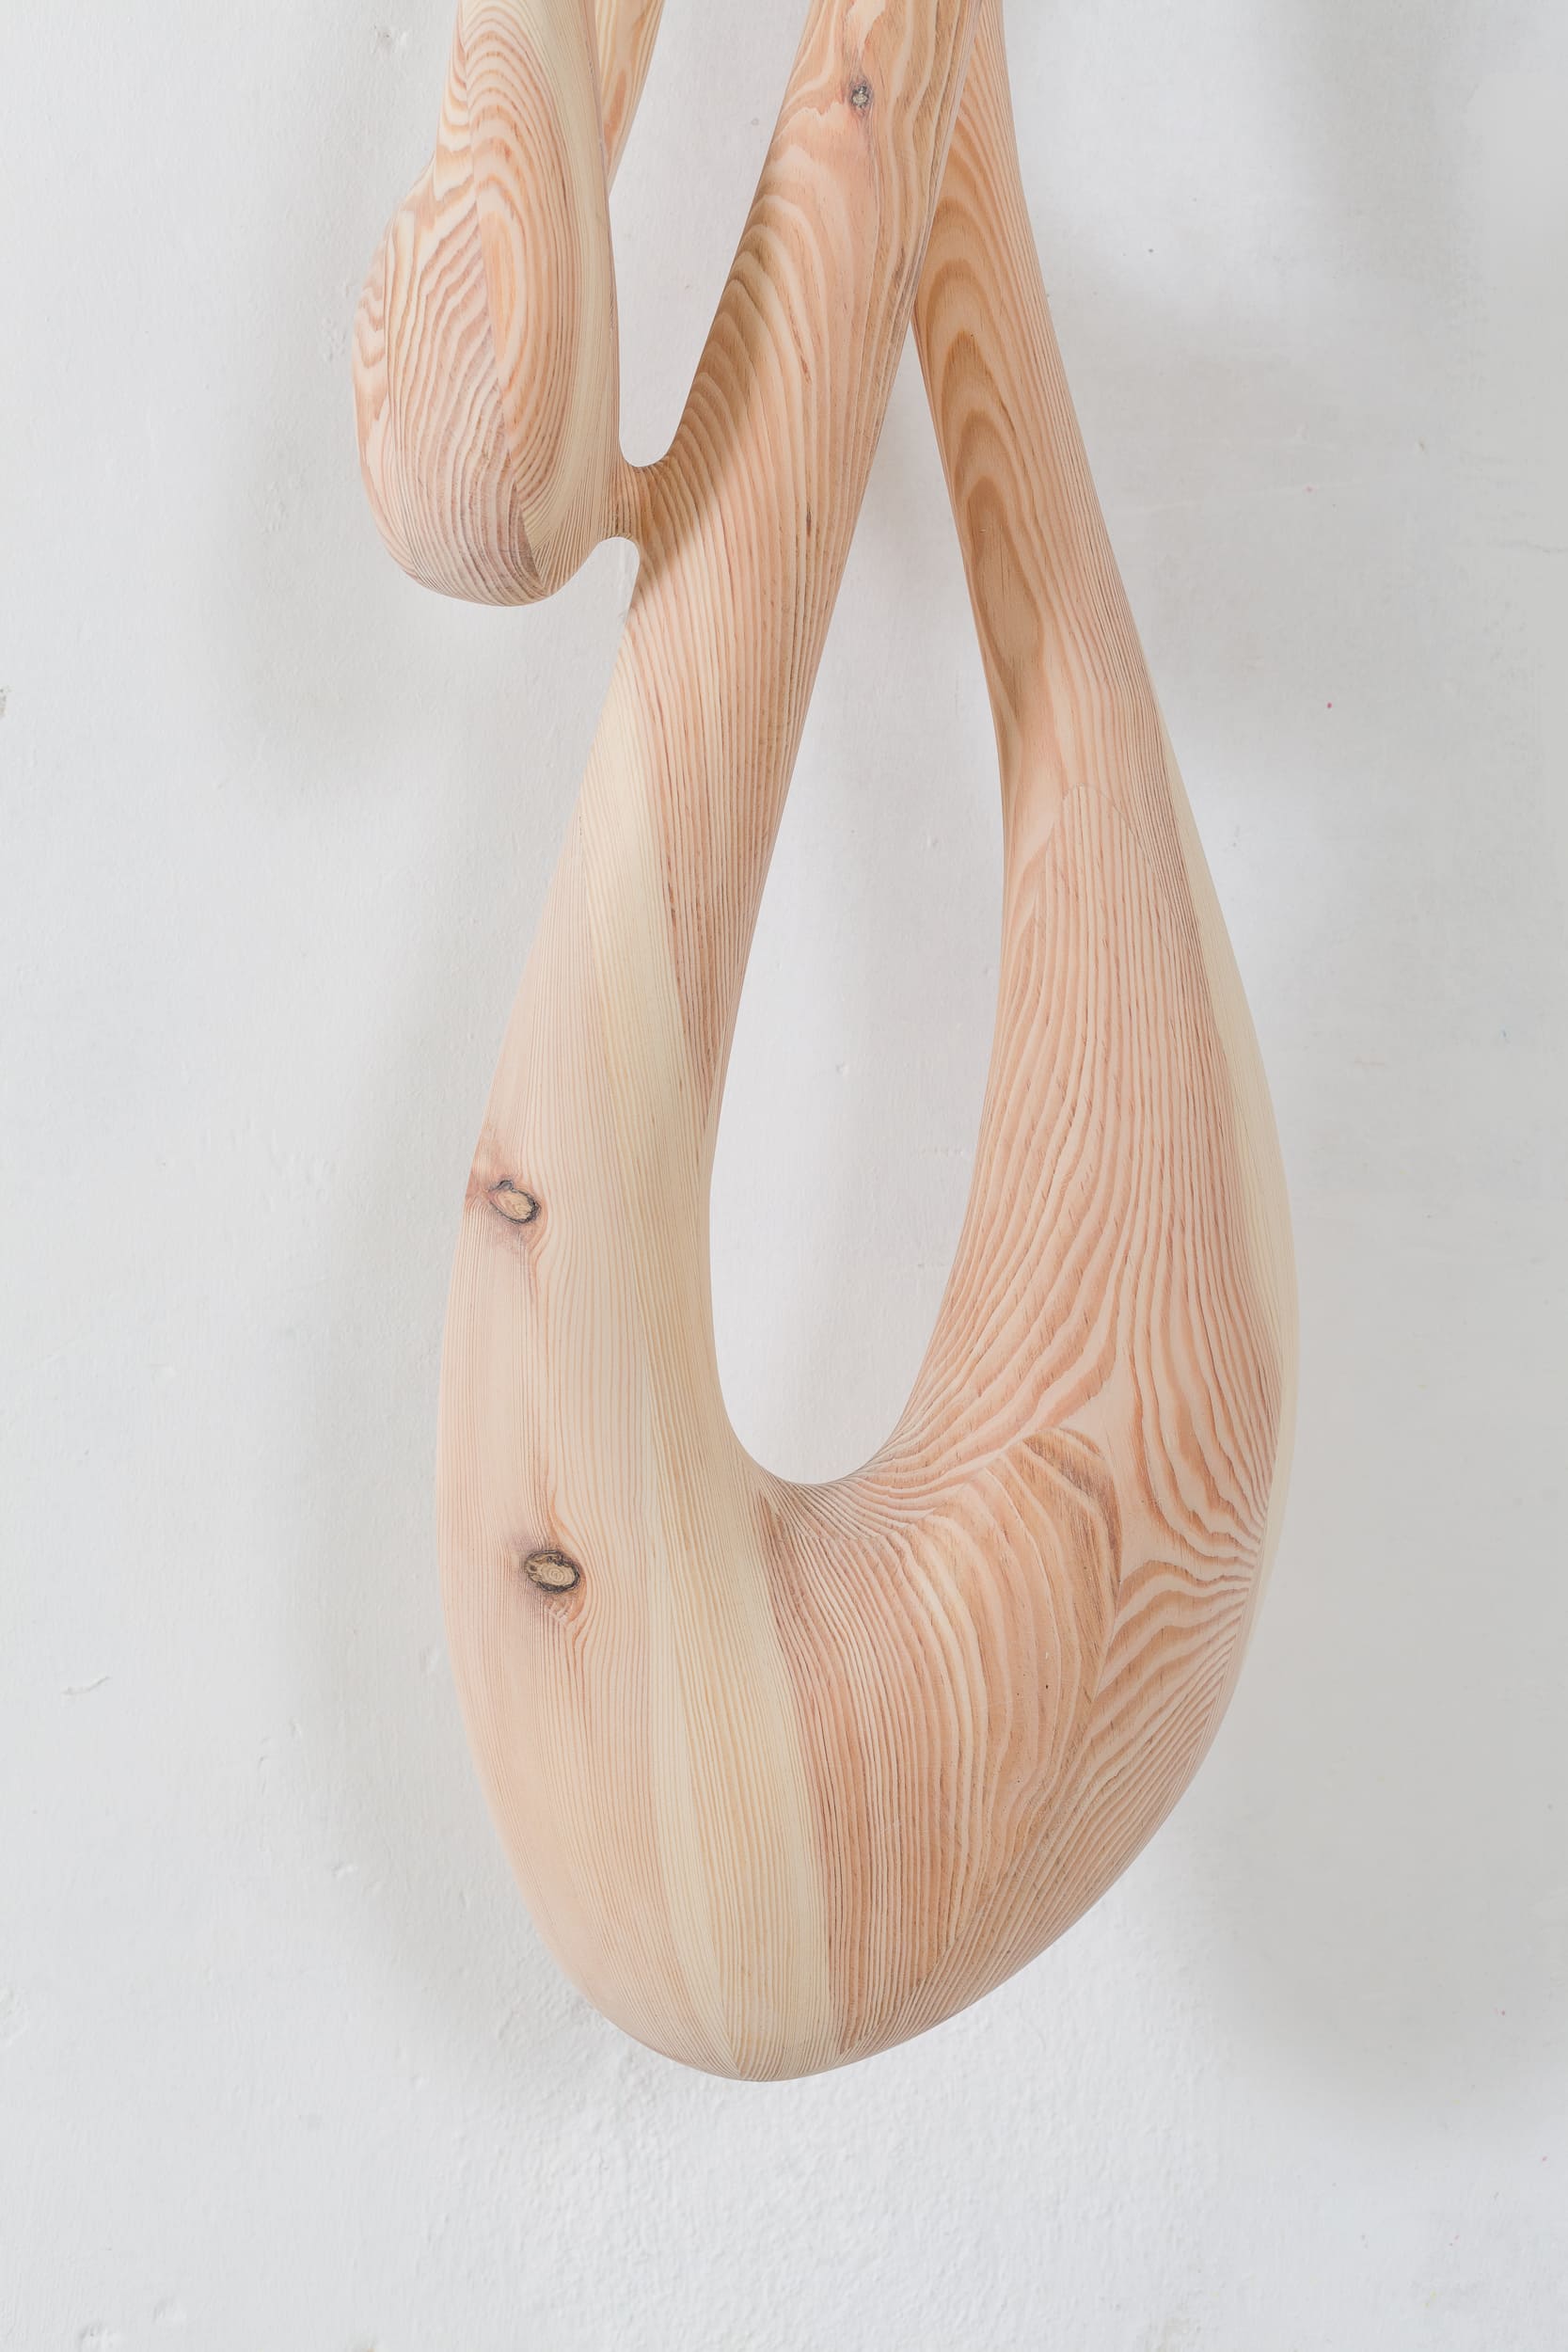 Wood Sculpture N°9 (pendant)1 copy